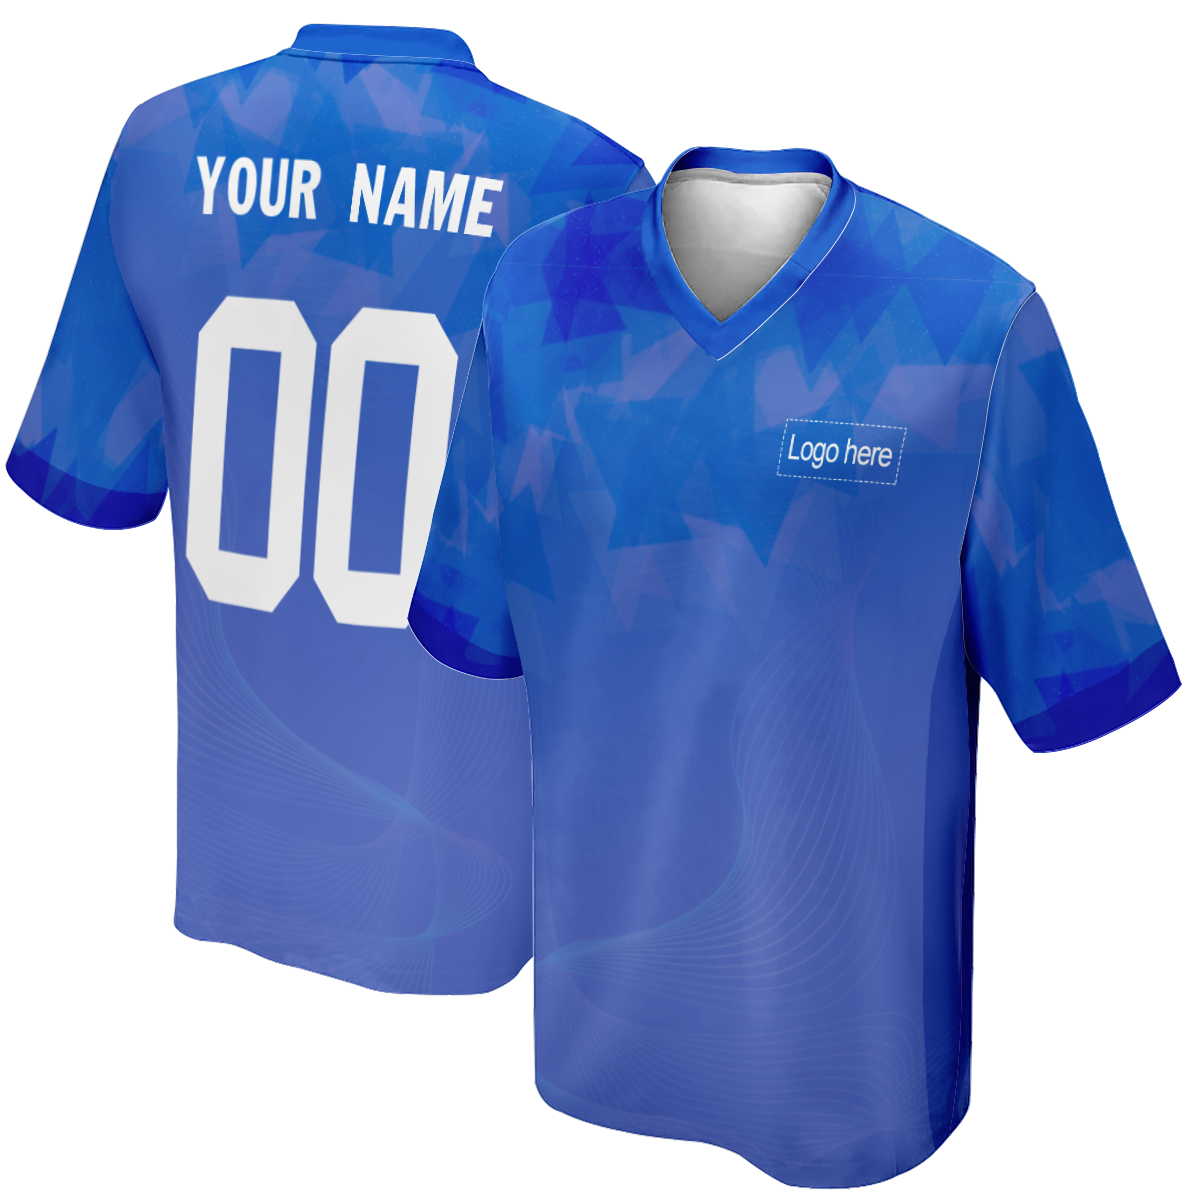 Camisa de futebol masculina personalizada autêntica da Copa do Mundo do Brasil com nome